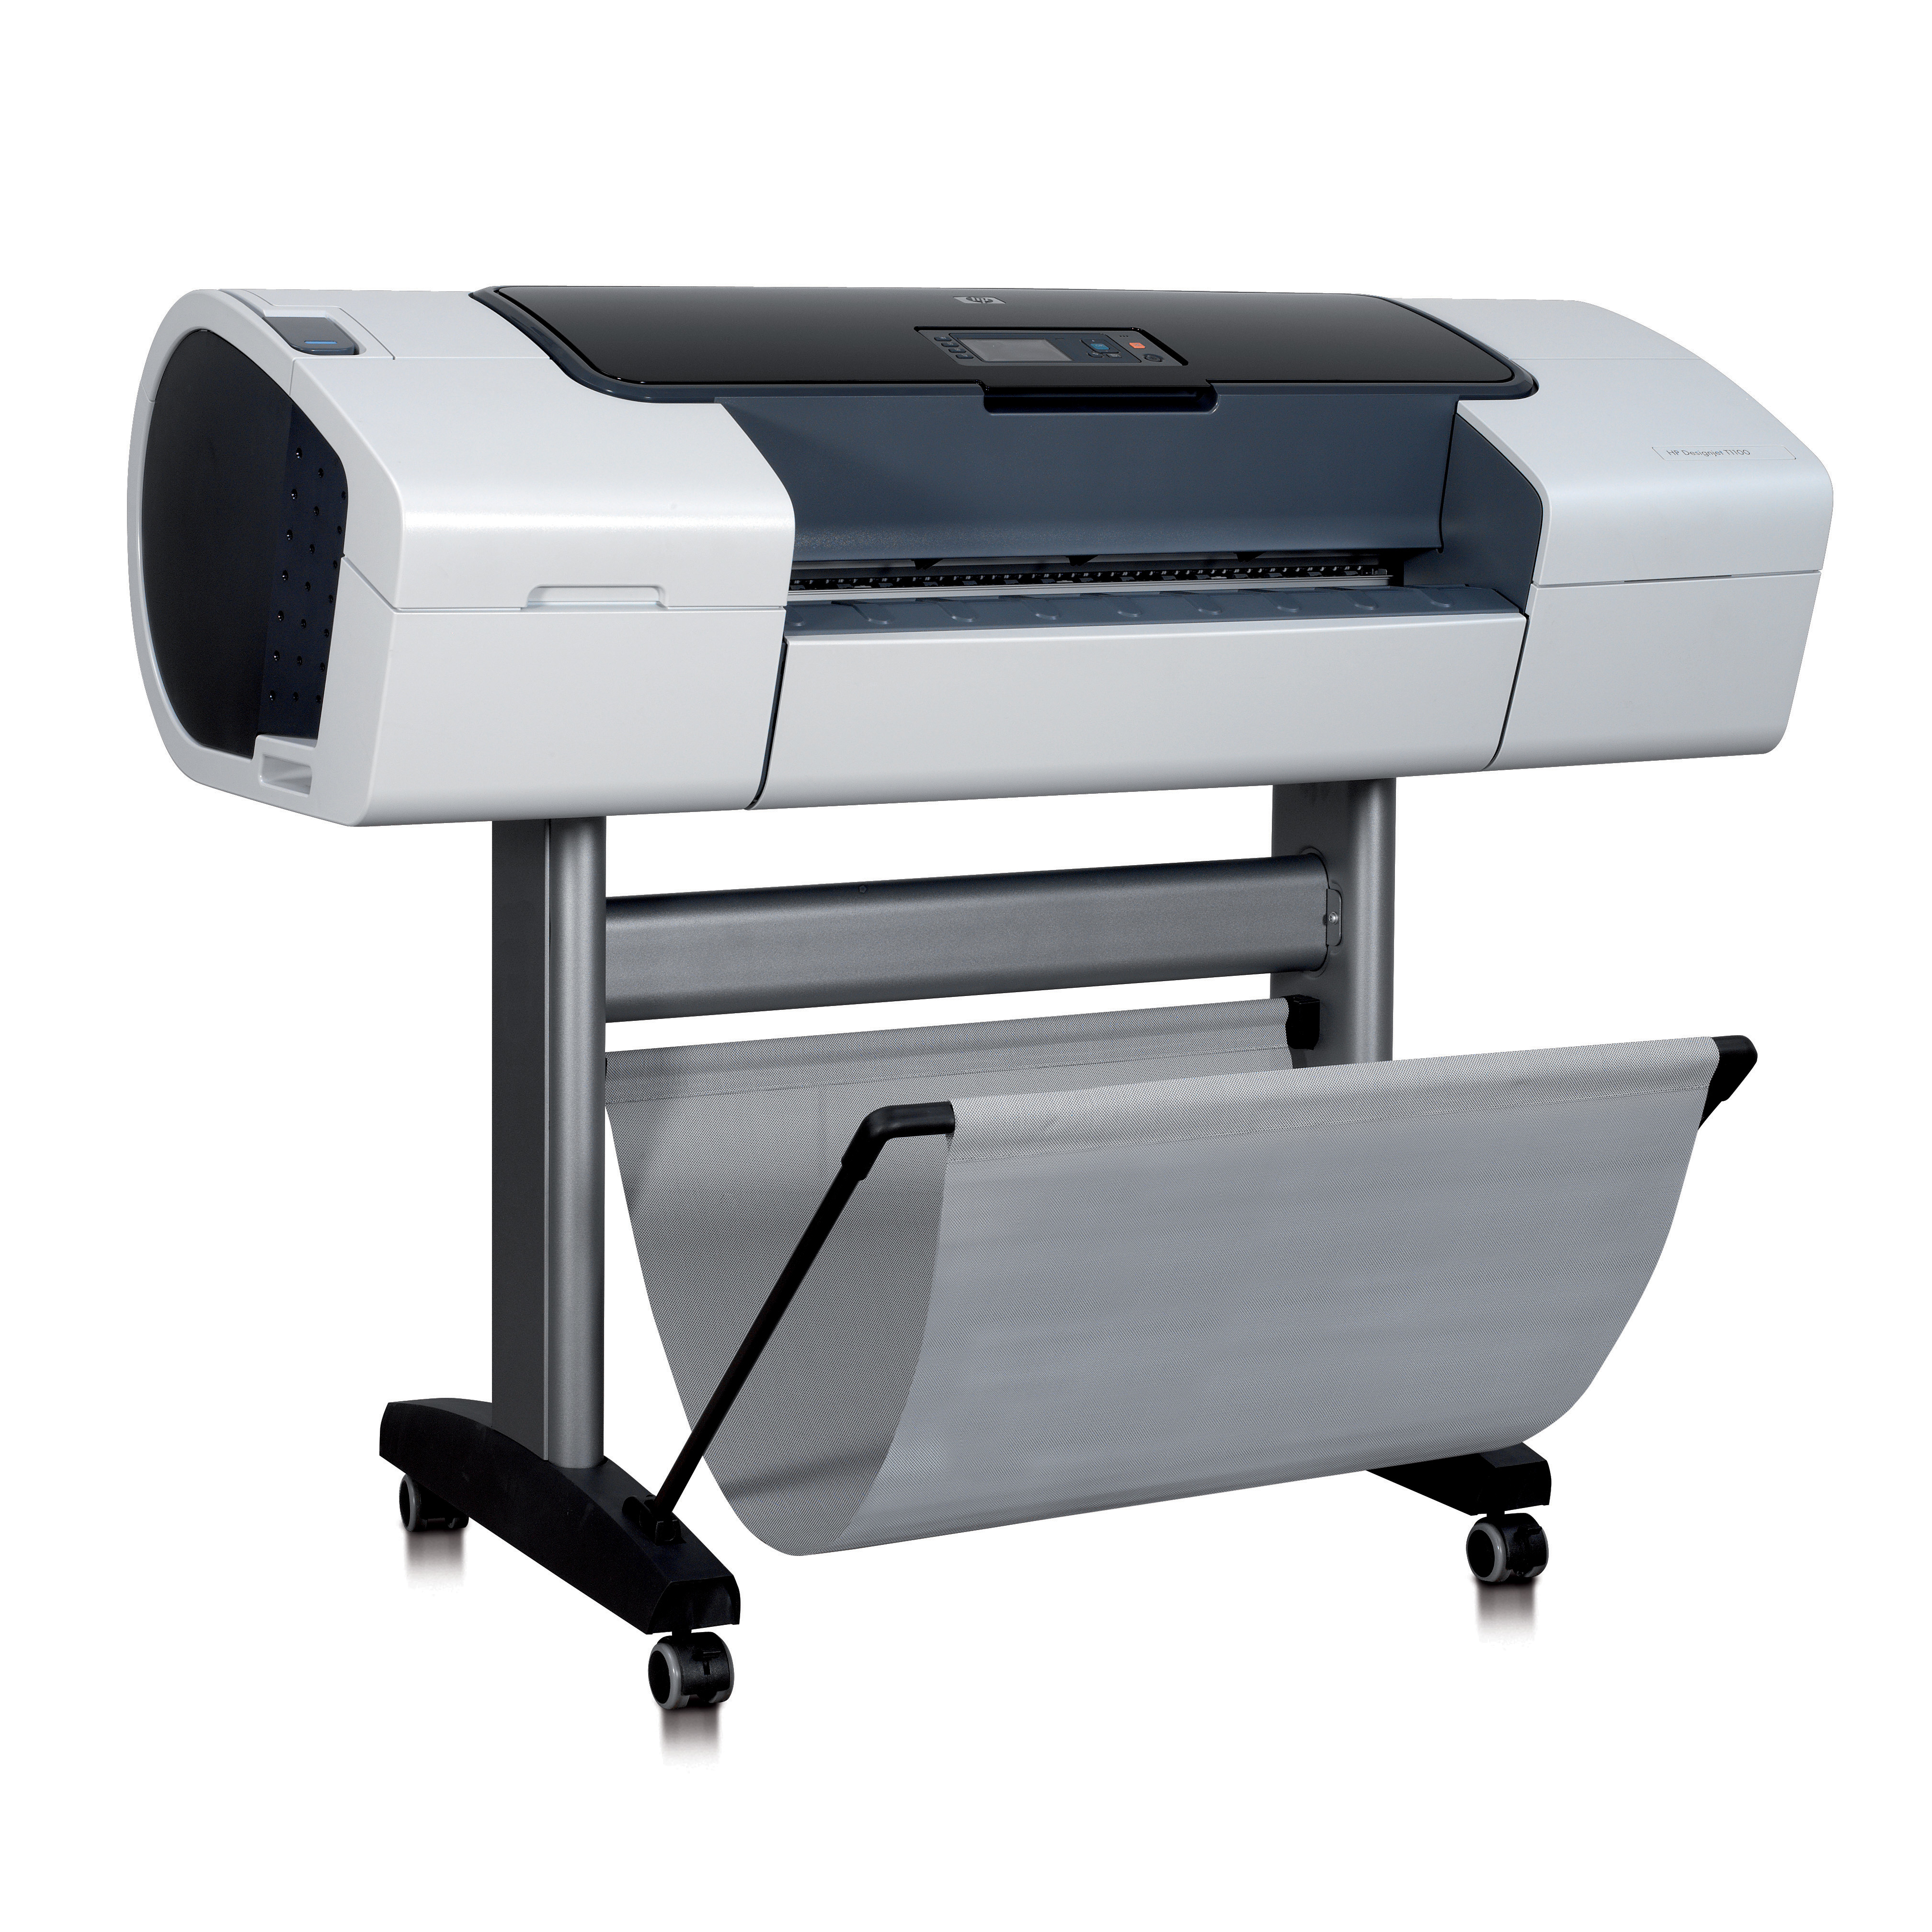 Q6684A HP Designjet T1100ps (A1) printer - Refurbished